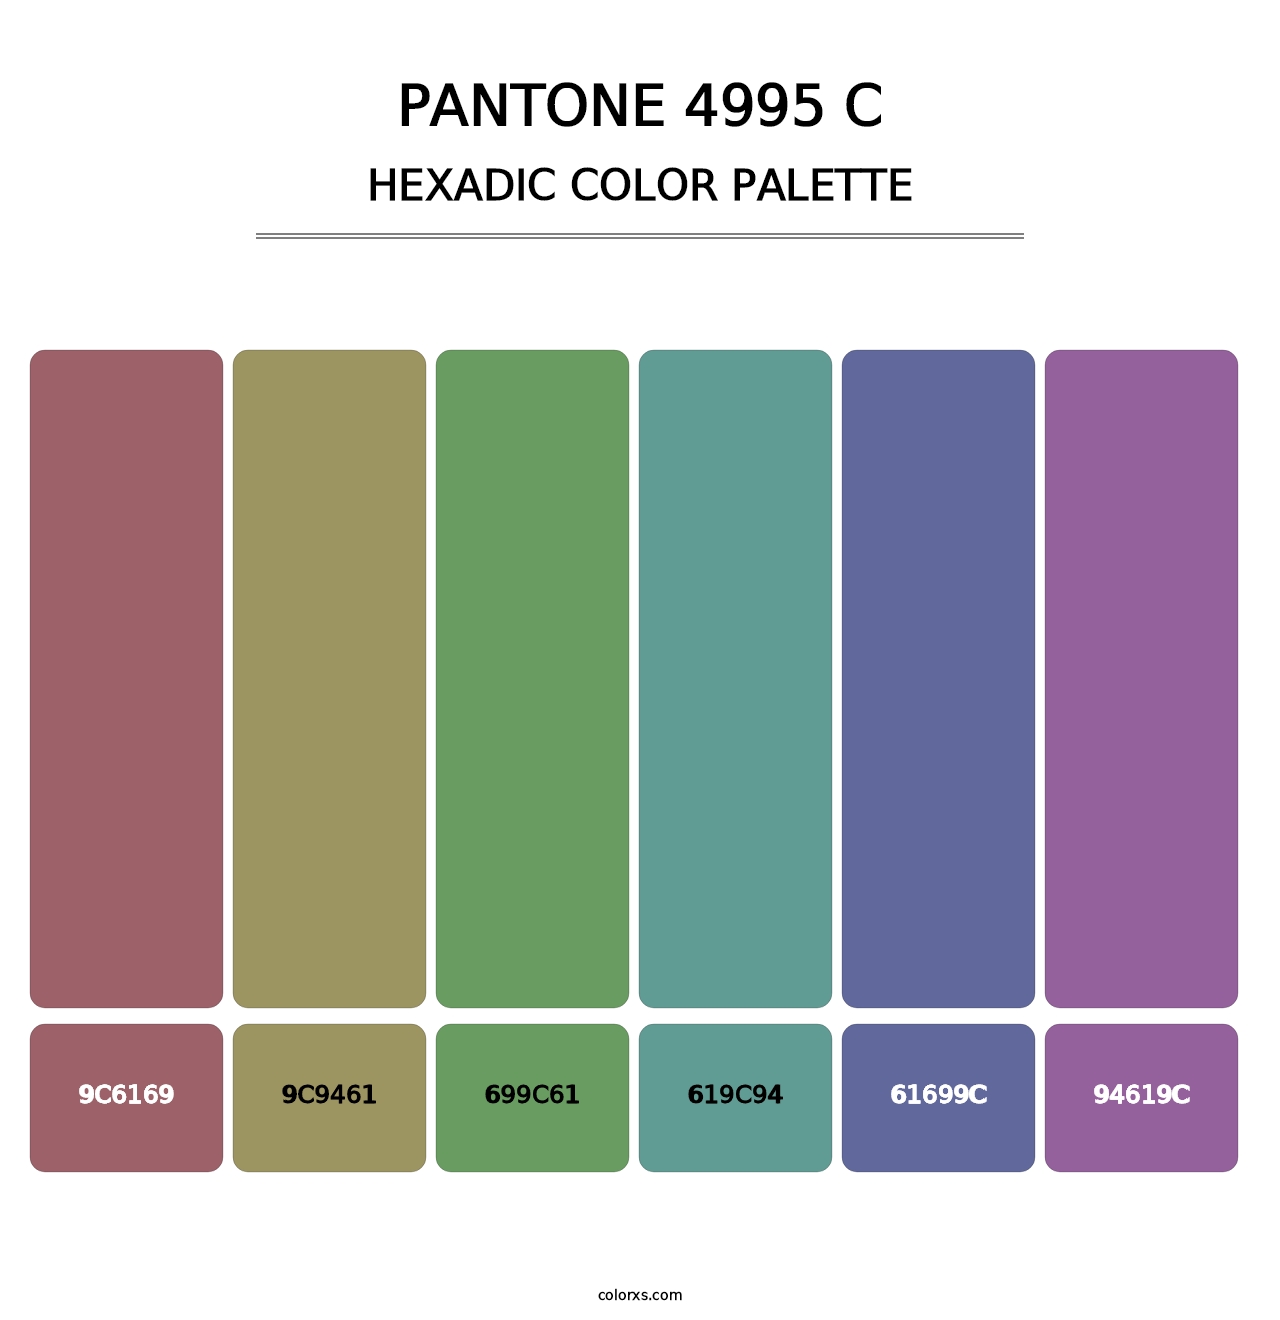 PANTONE 4995 C - Hexadic Color Palette